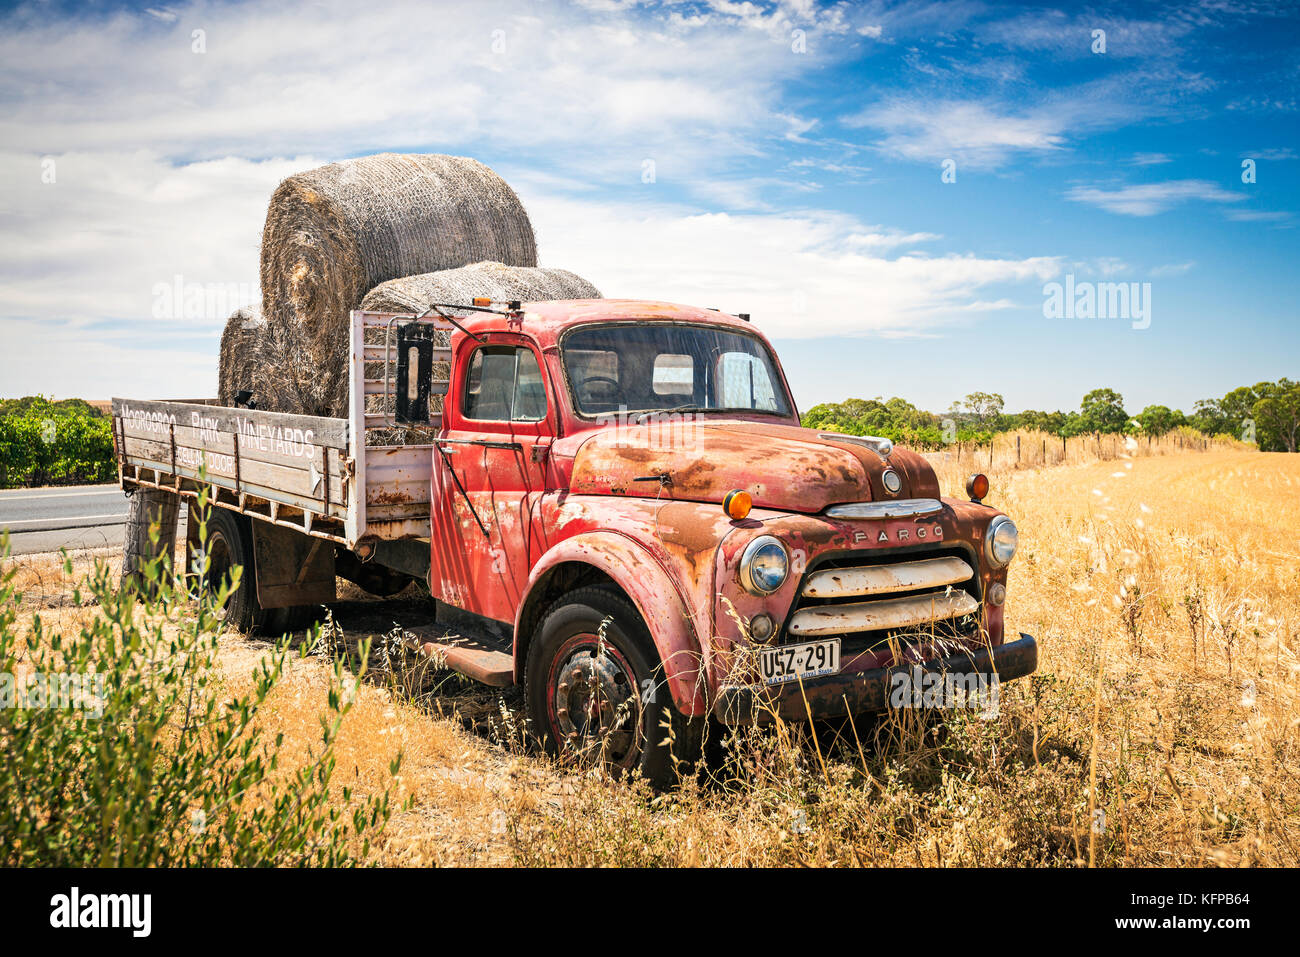 Adelaide, Australia - January 16, 2016: Old abandoned truck with hay near Moorooroo Park Vineyards in Barossa Valley, South Australia Stock Photo